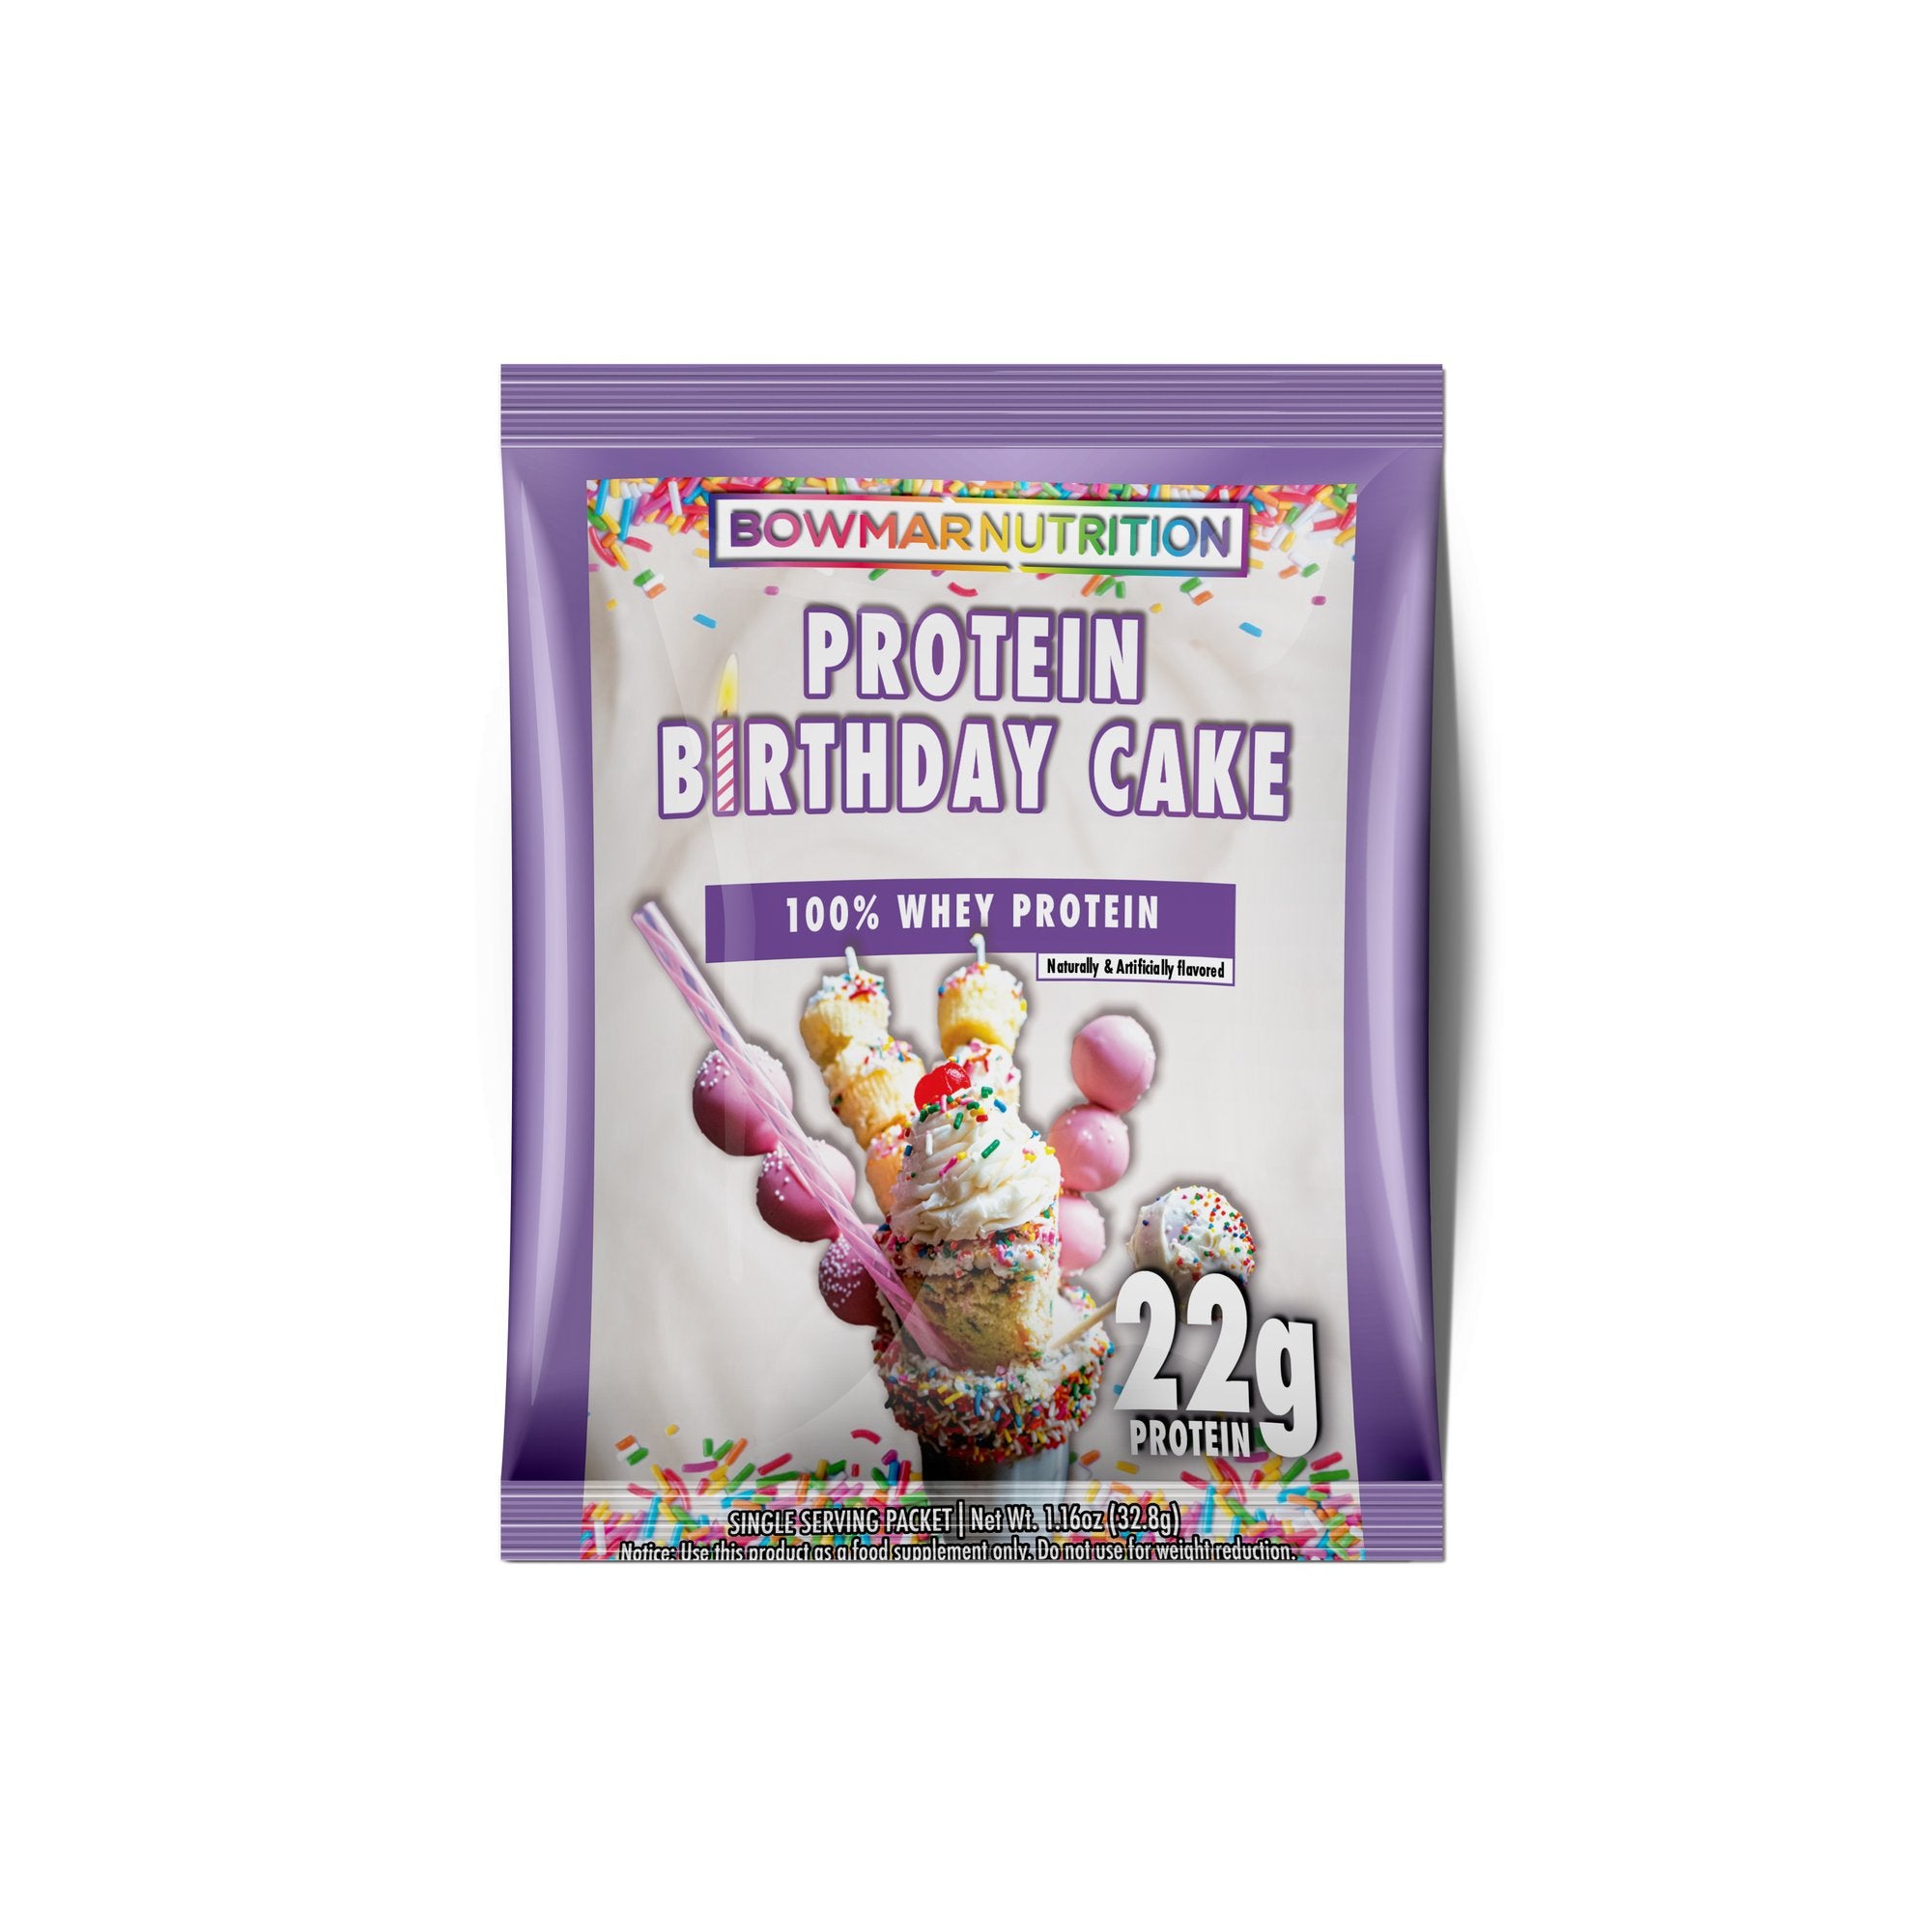 Bowmar Whey Protein Powder Sample (1 serving) Protein Snacks Birthday Cake bowmar